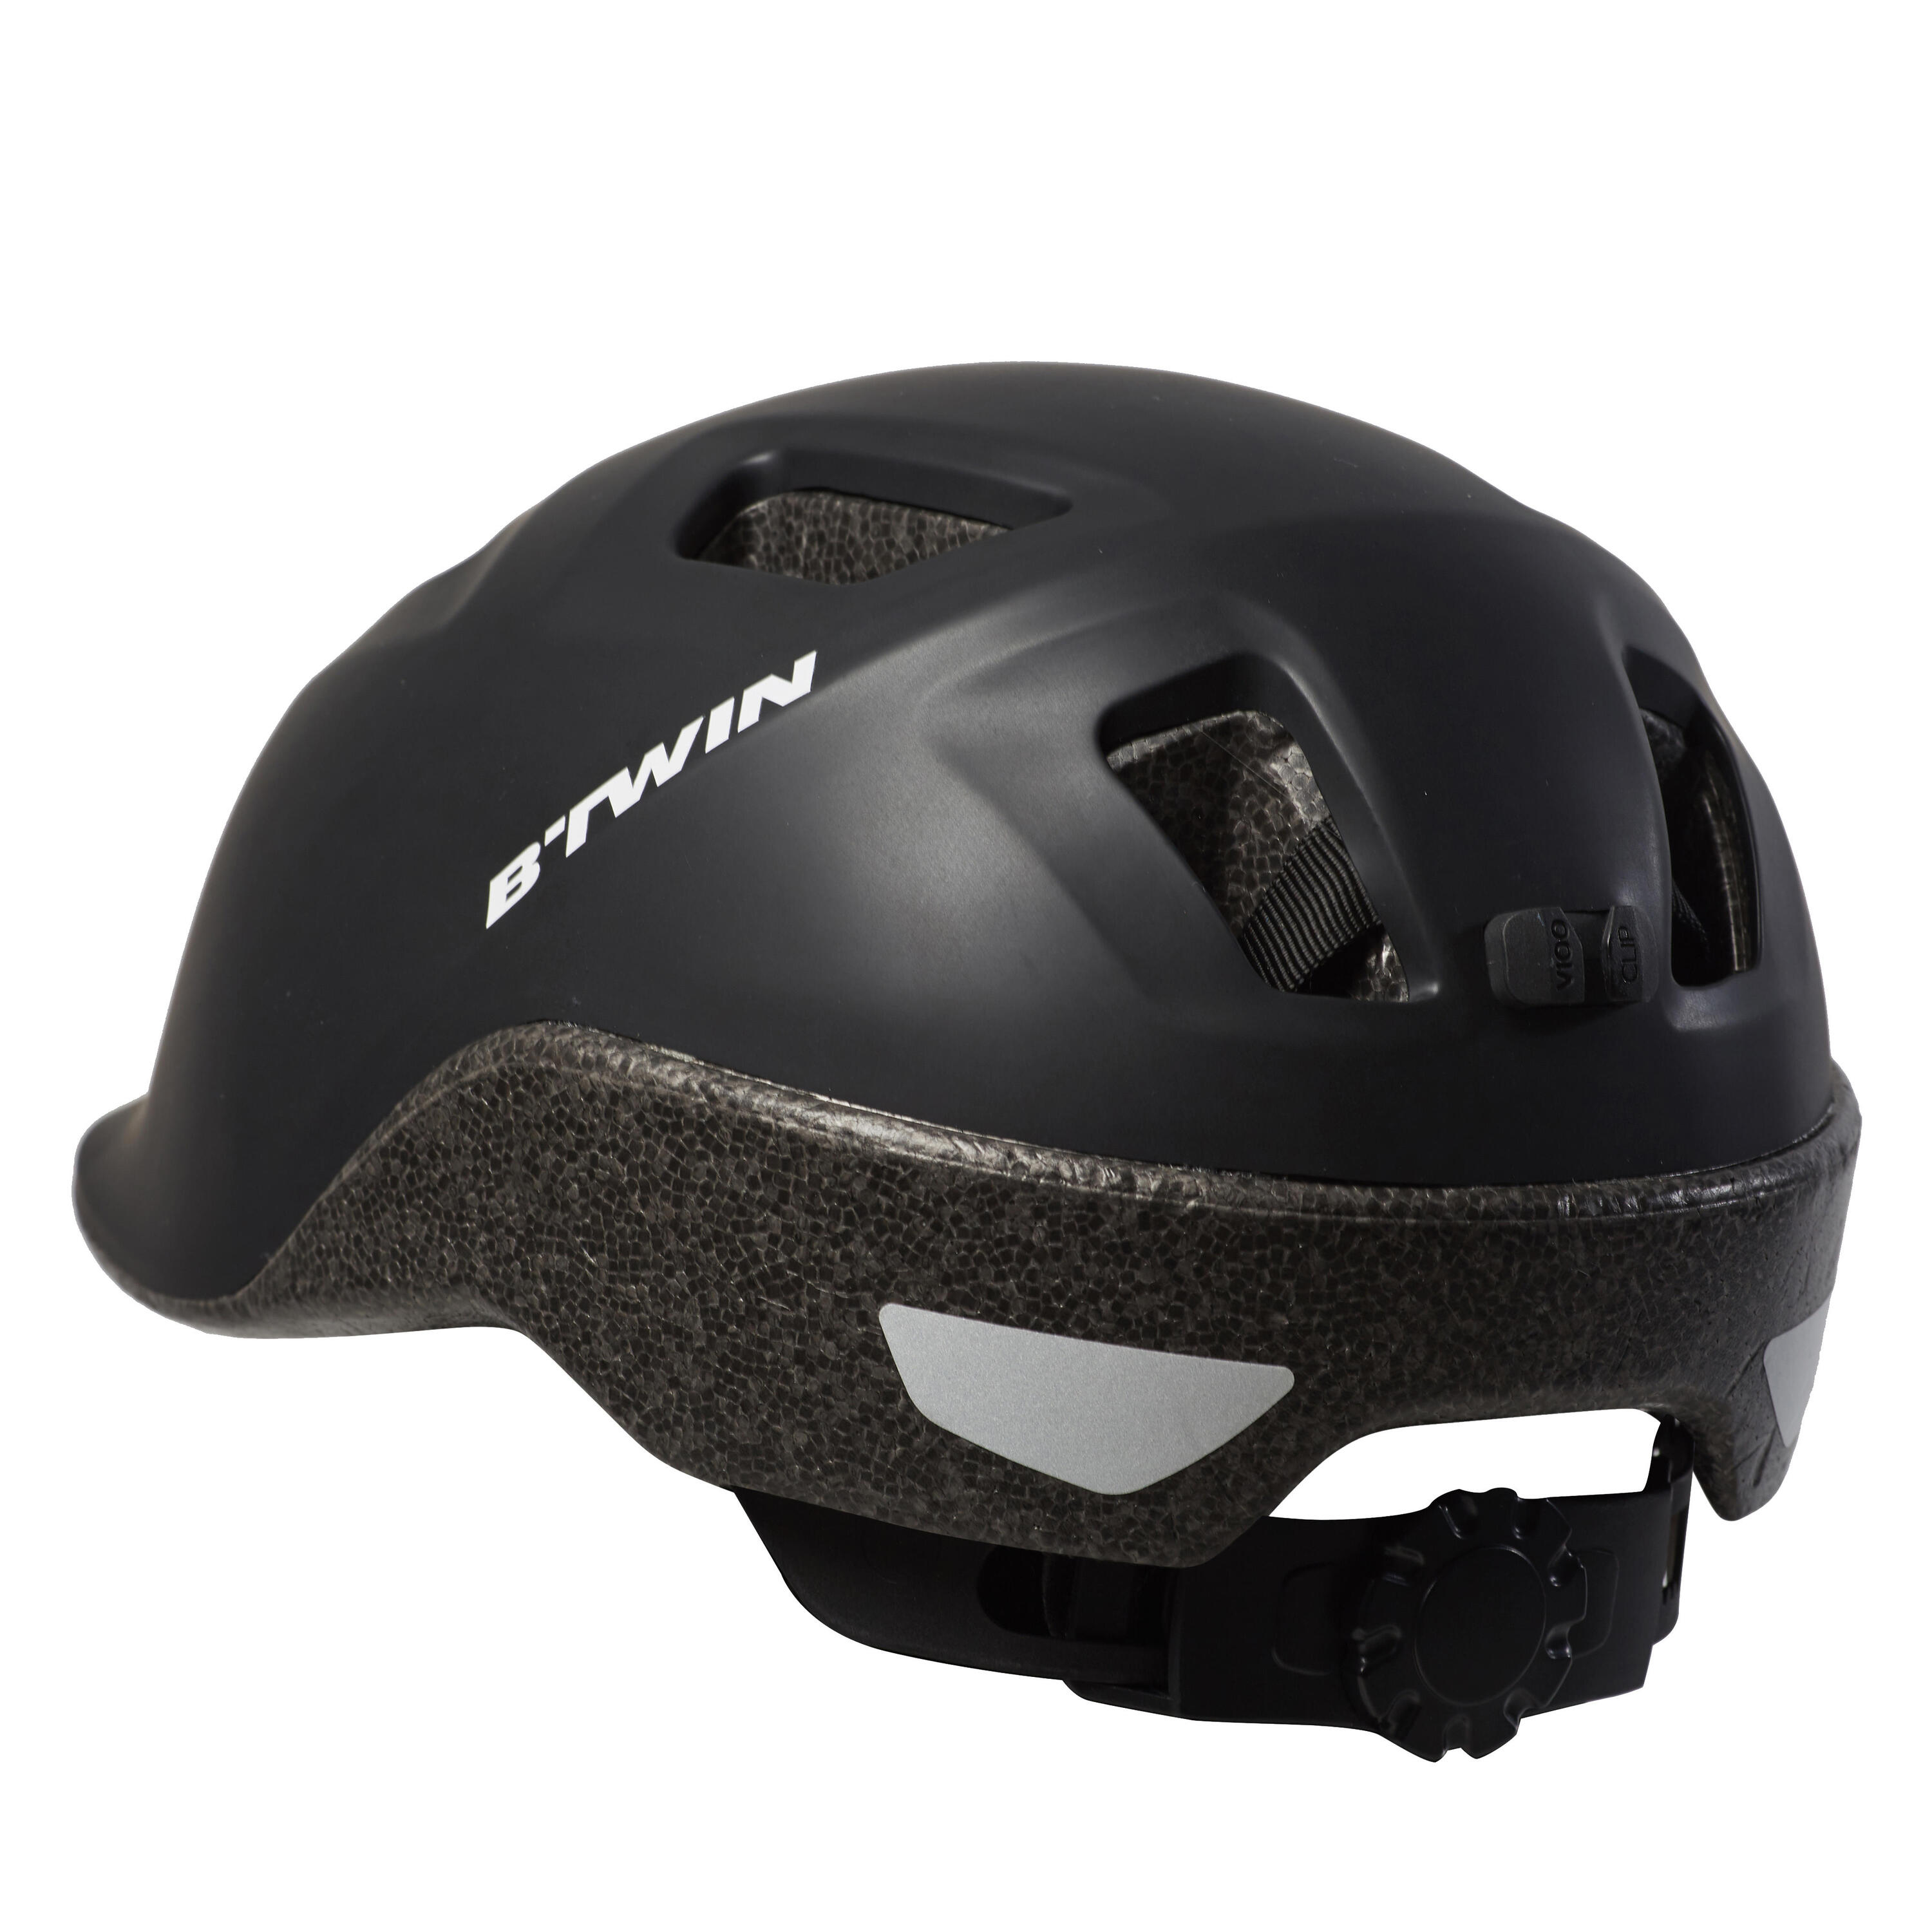 BTWIN 100 City Cycling Helmet Black